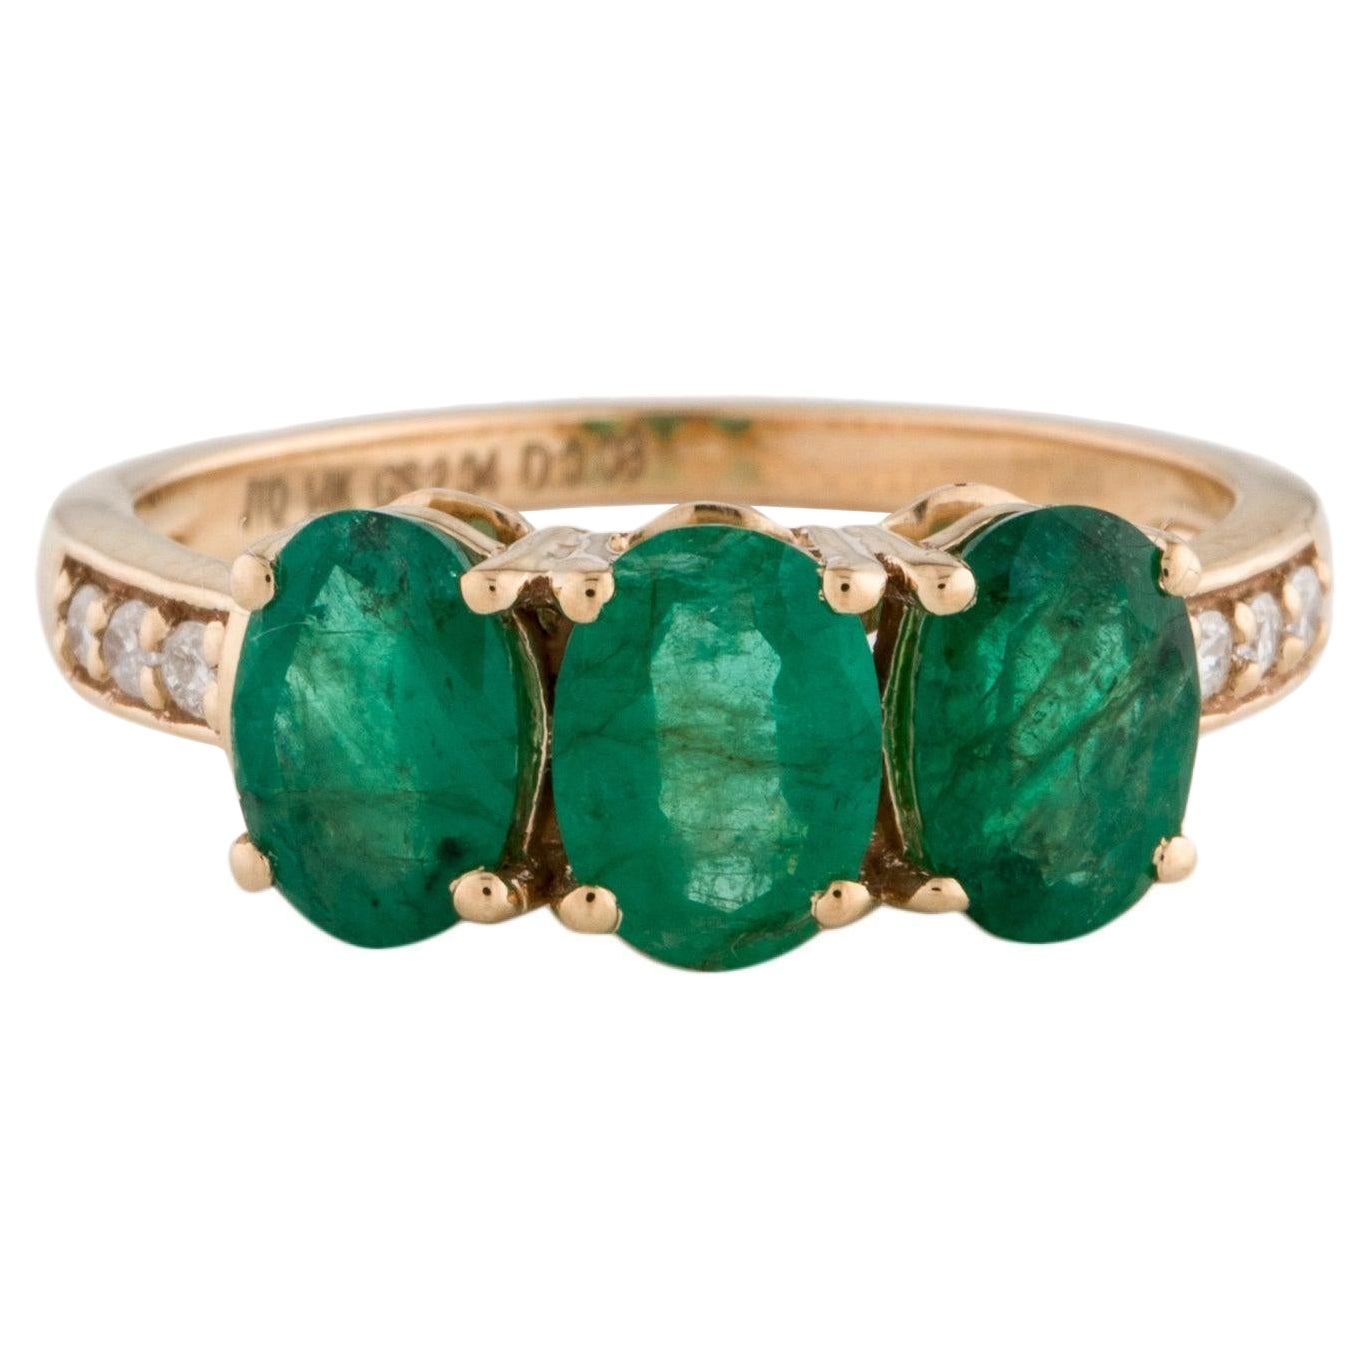 Atemberaubende 14K Smaragd & Diamond Band Ring 2,10ctw - Größe 6,75 - Timeless Luxury im Angebot